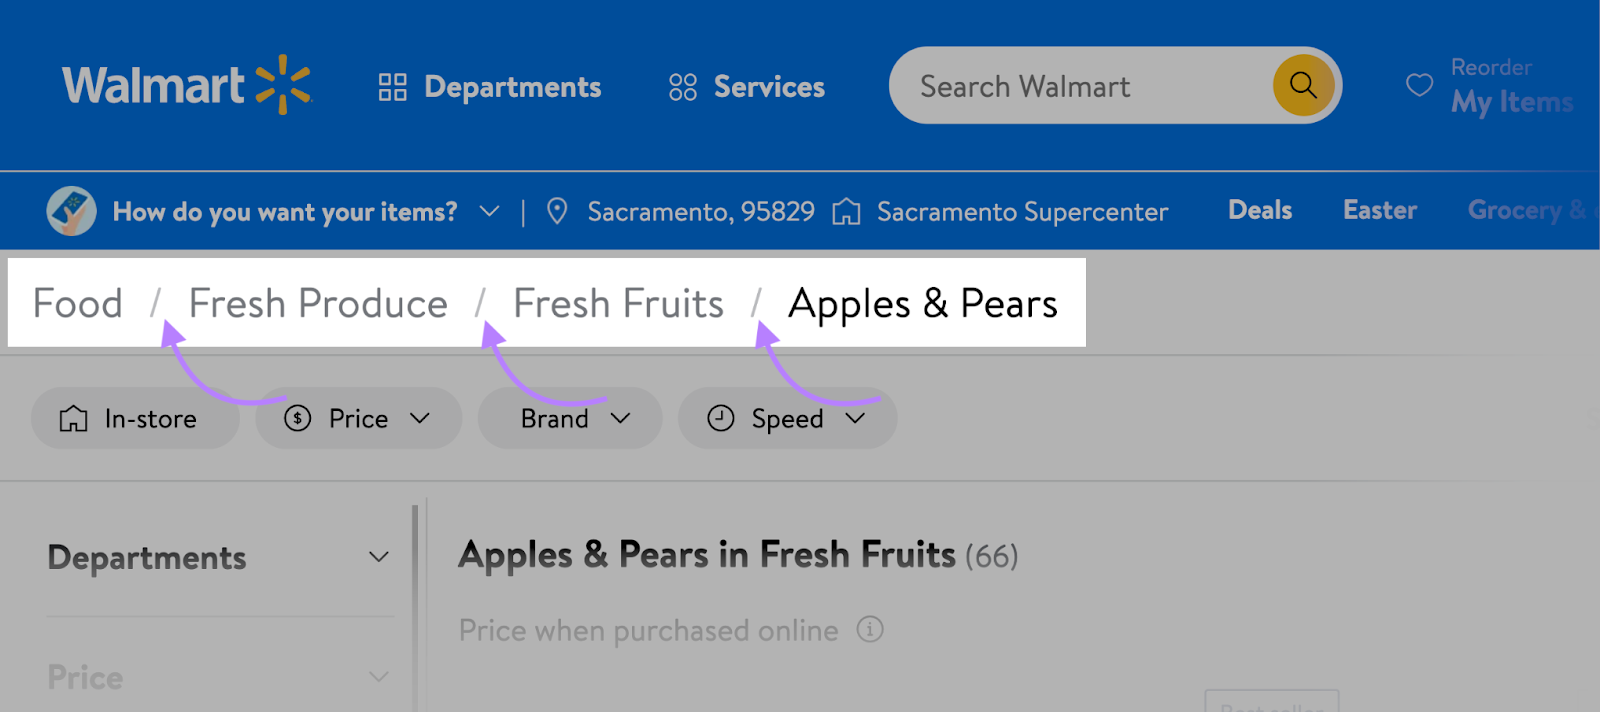 Walmart uses forward slash to separate items in breadcrumb menu